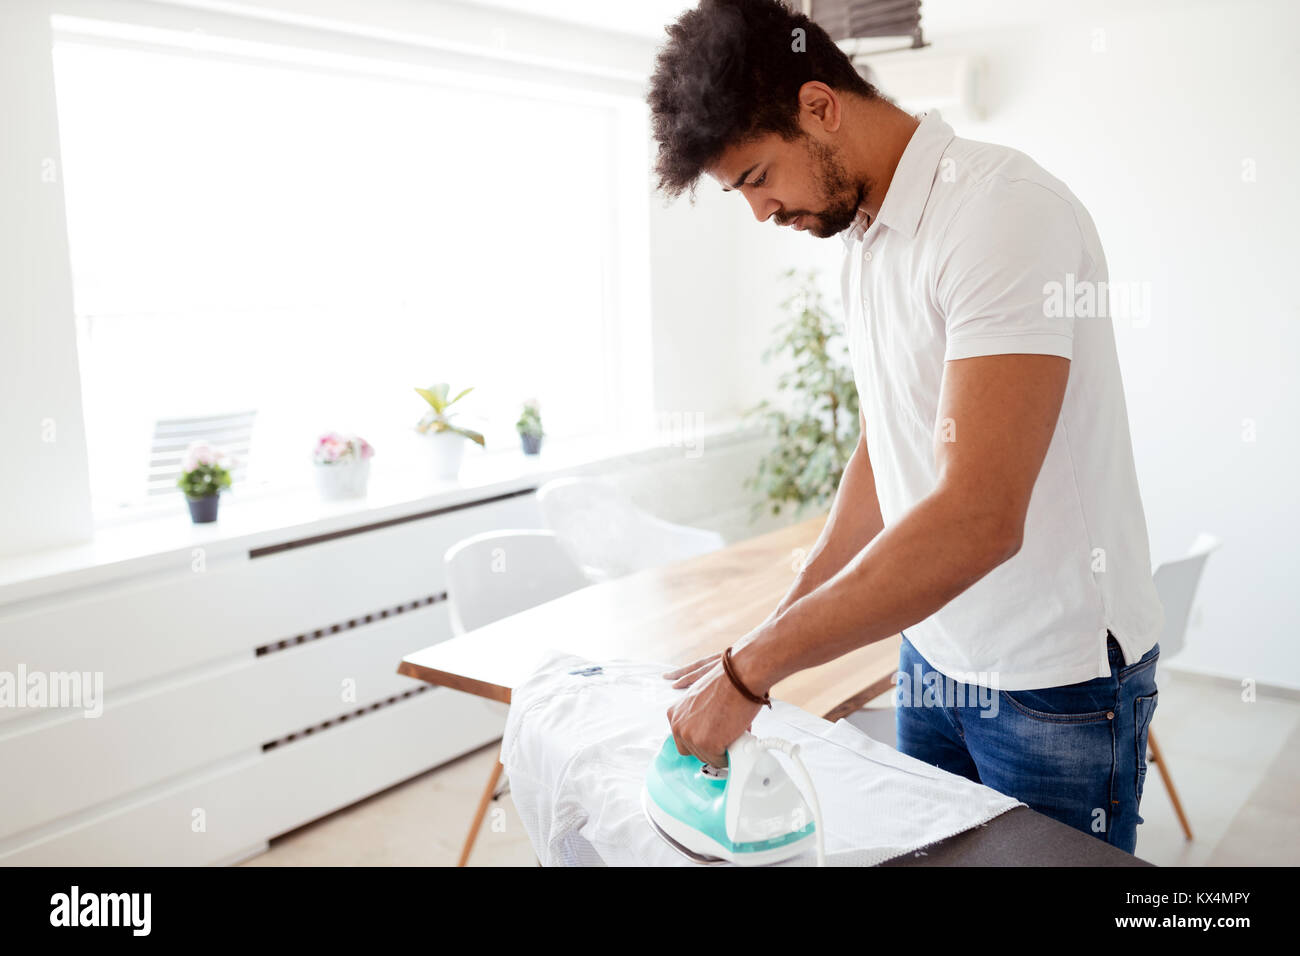 Man ironing shirt on ironing board Stock Photo